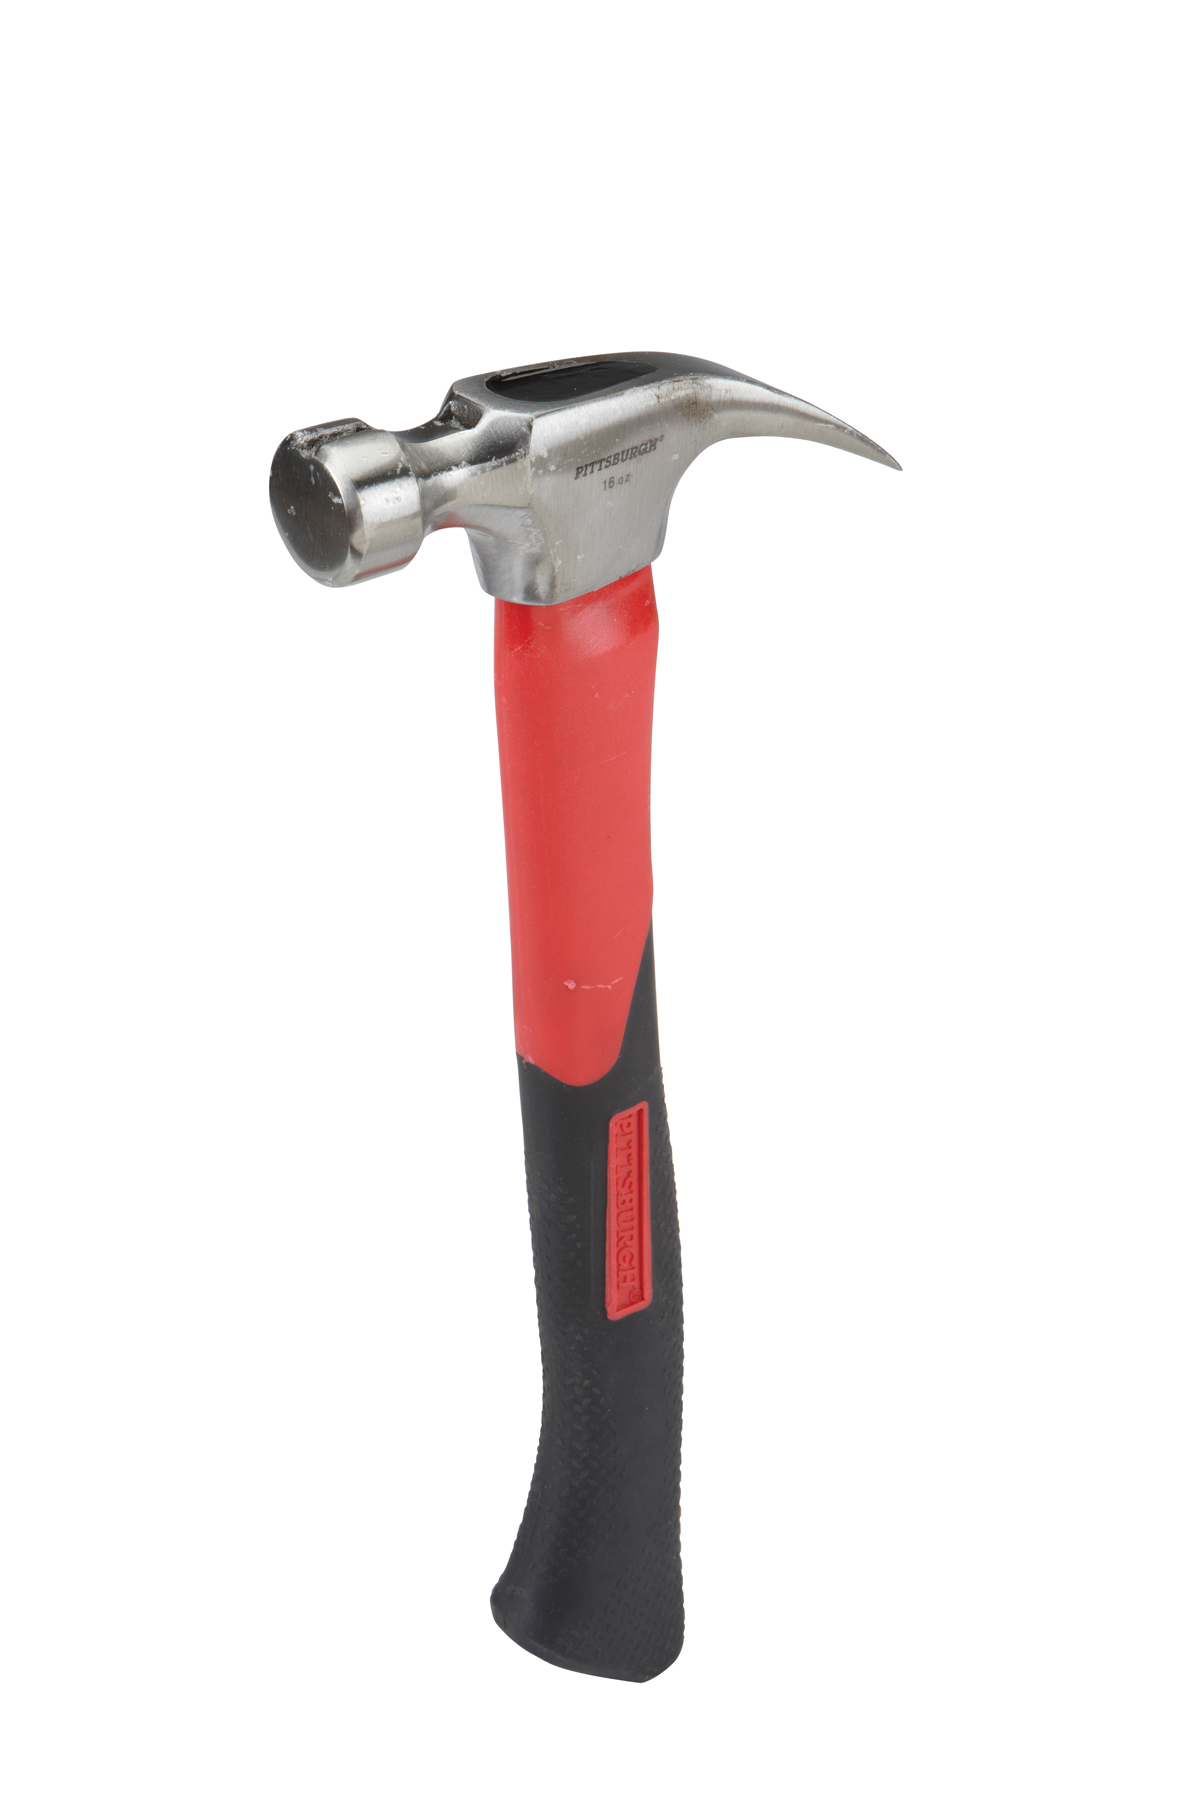 PITTSBURGH 16 oz. Fiberglass Professional Rip Hammer - Item 60519 / 69108 / 98553